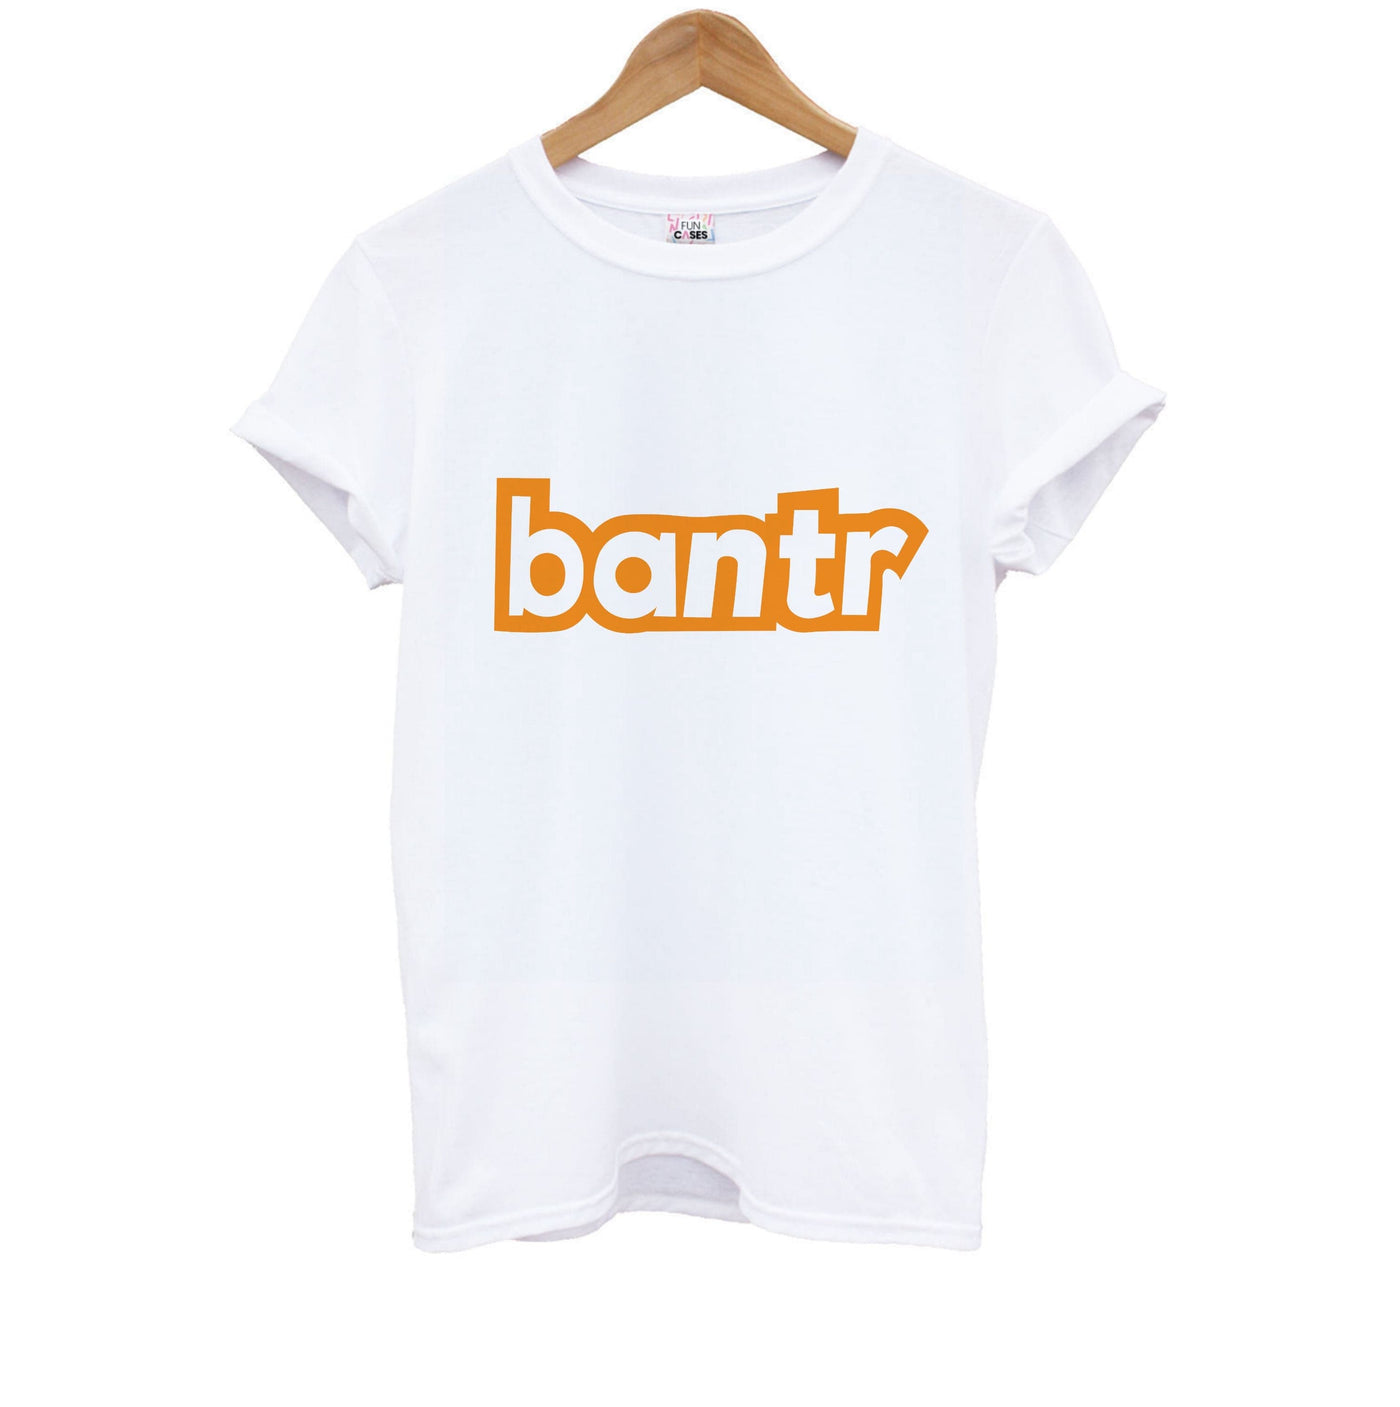 Bantr - Ted Lasso Kids T-Shirt